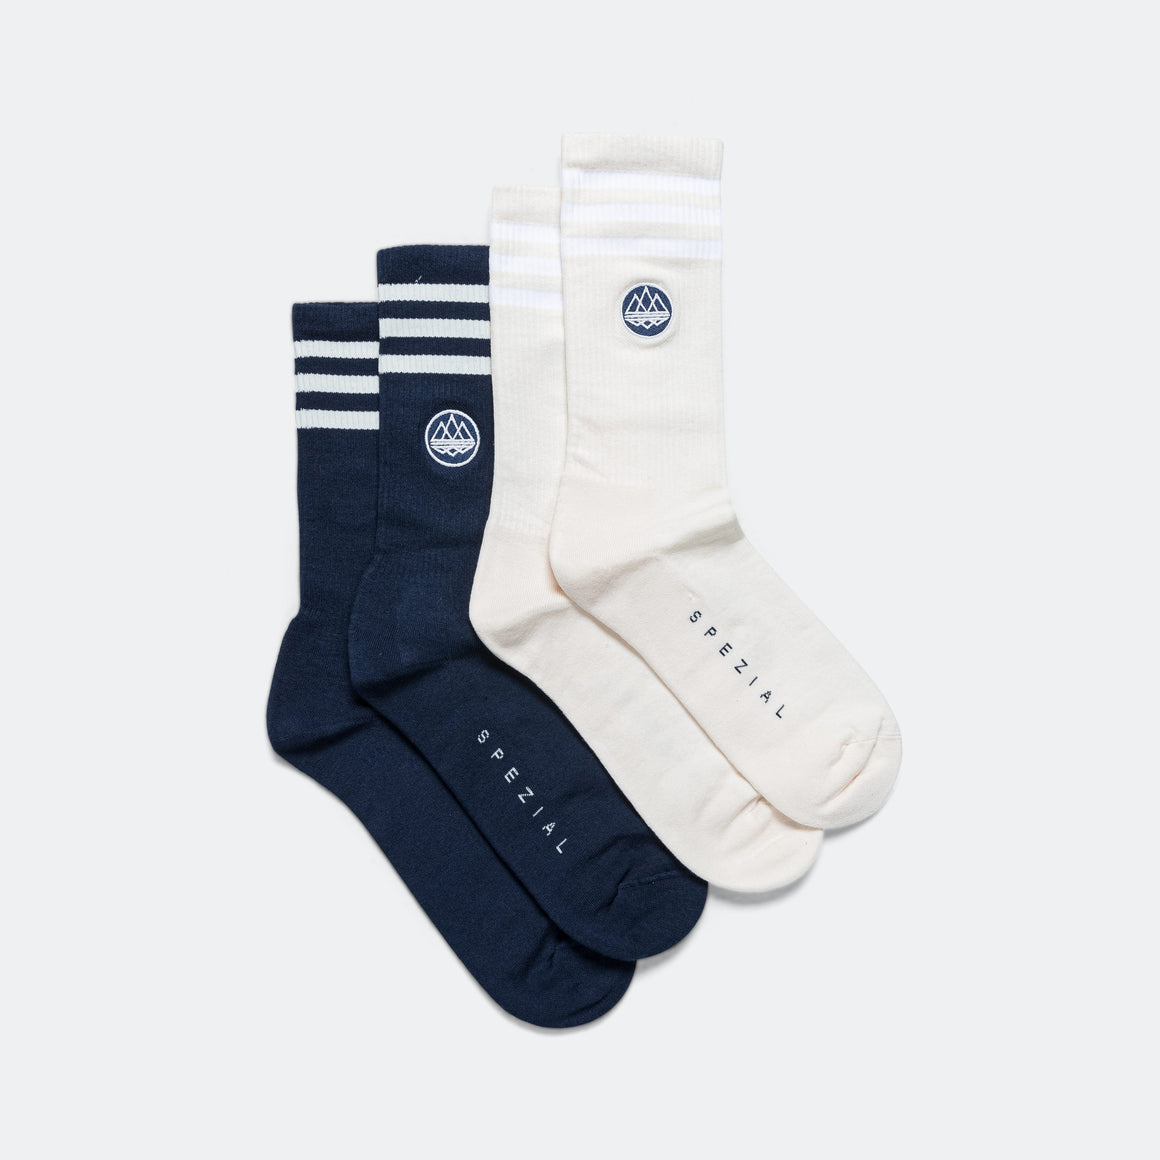 Mod Trefoil Socks - Night Navy/Wonder White